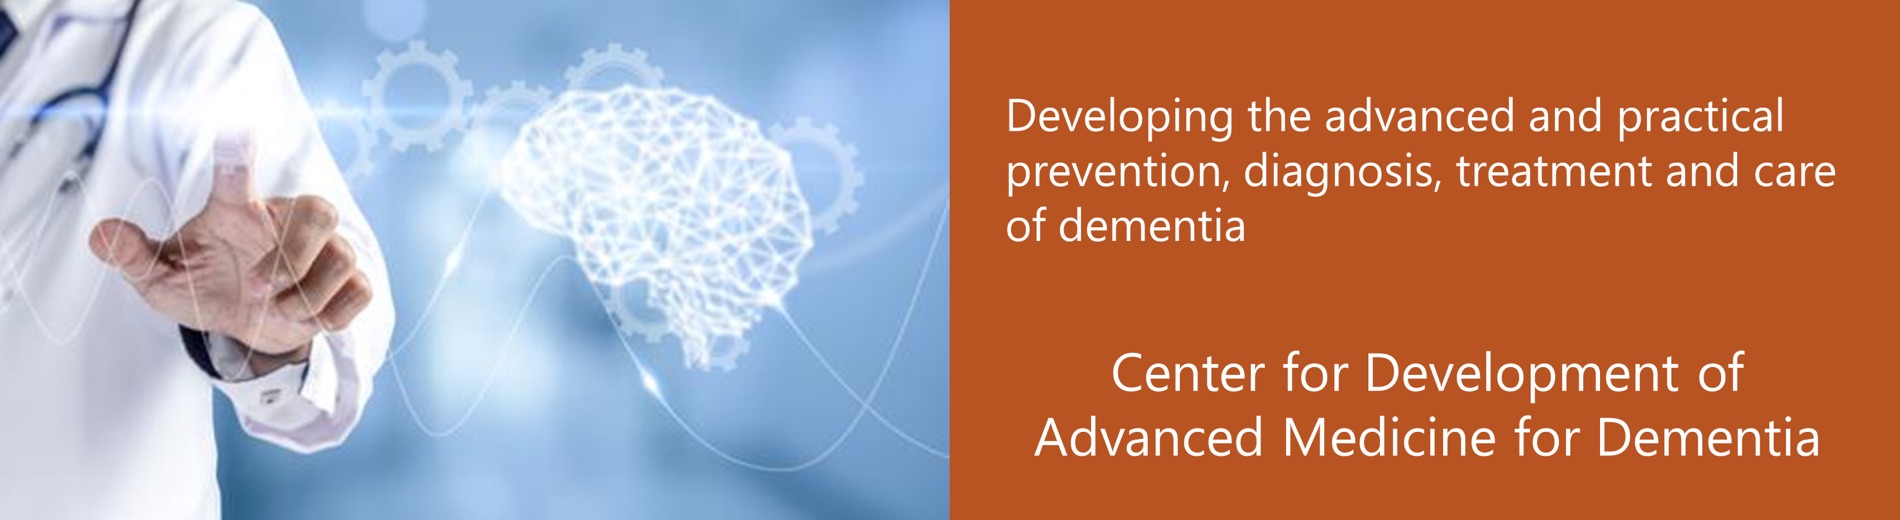 Center for Development of Advenced Medicine for Dementia